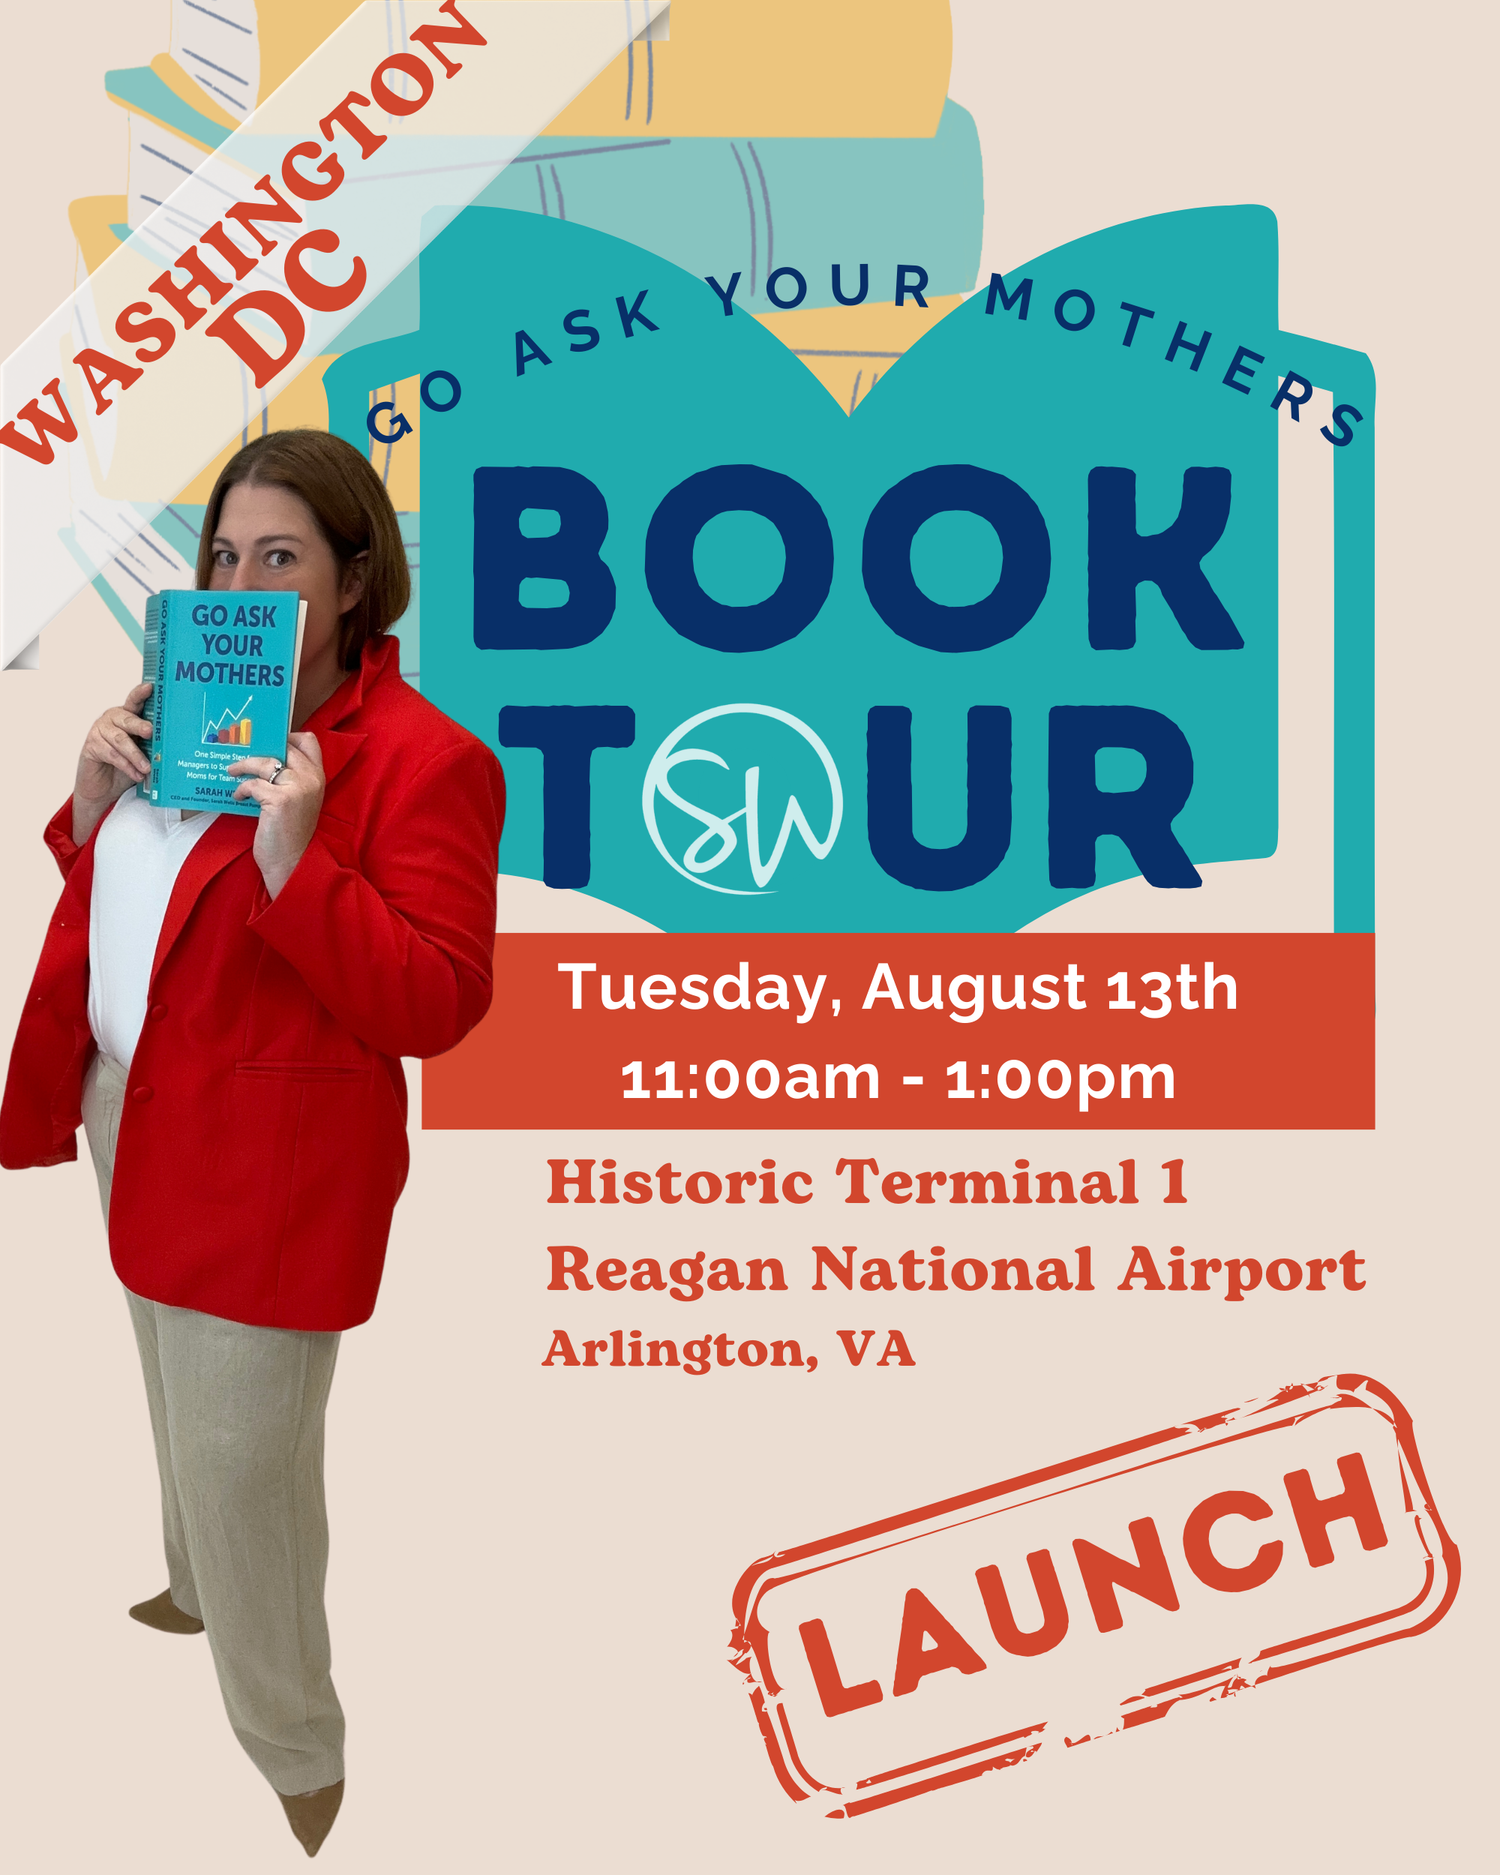 Arlington, VA - August 13th @ 11am - Book Launch Family Fun Event - FREE Ticket